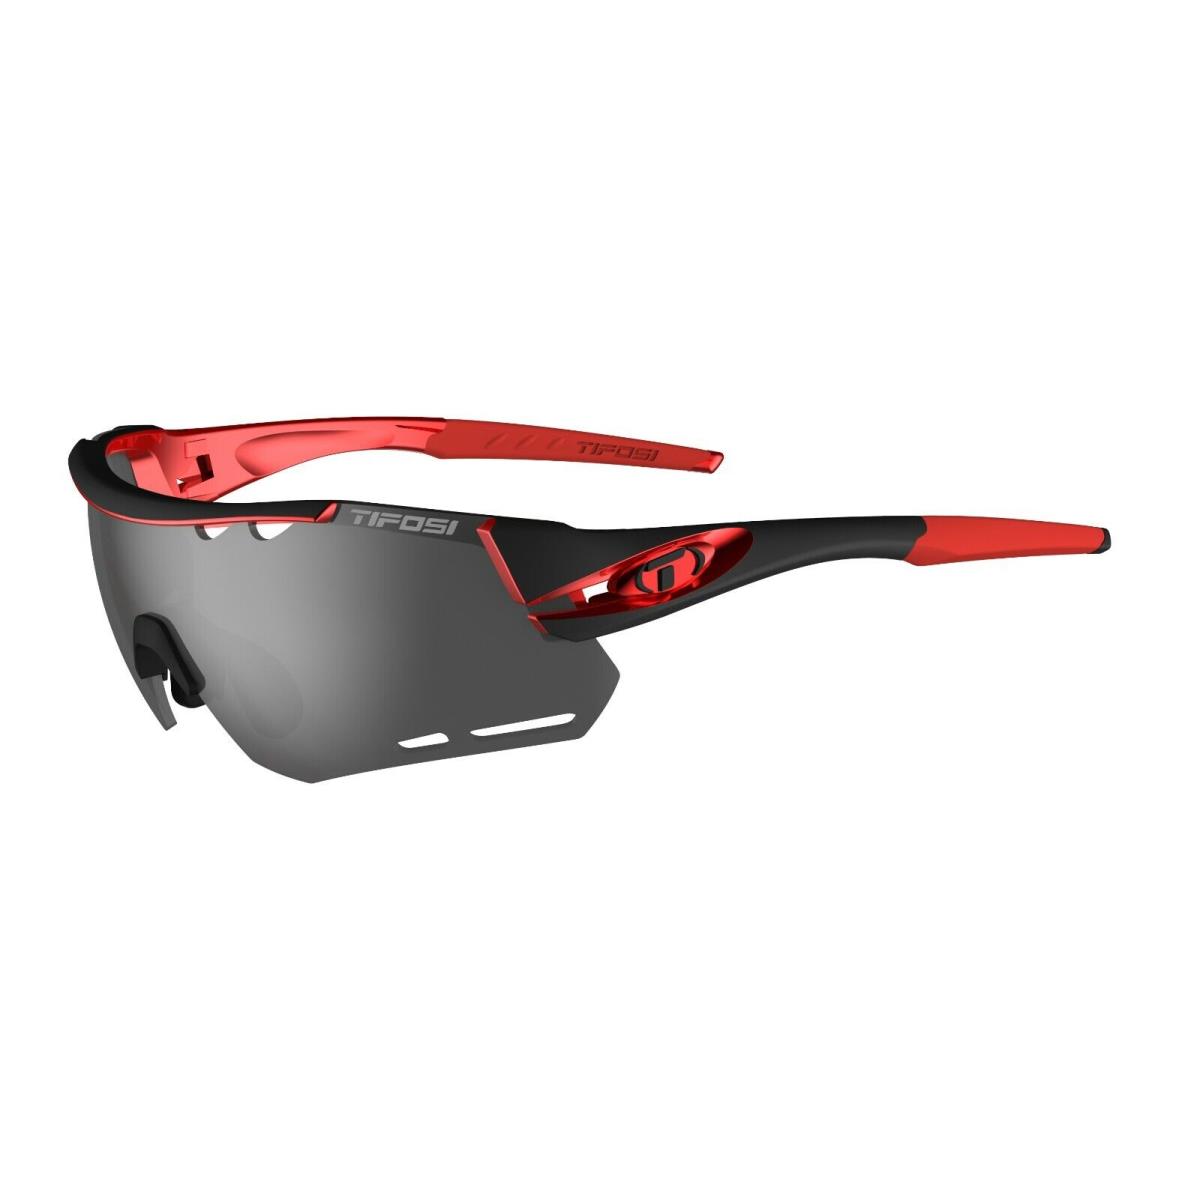 Tifosi Alliant Black White Gunmetal Neon Sunglasses Choose Your Style Black Red Smoke CYCLING 3-Lens